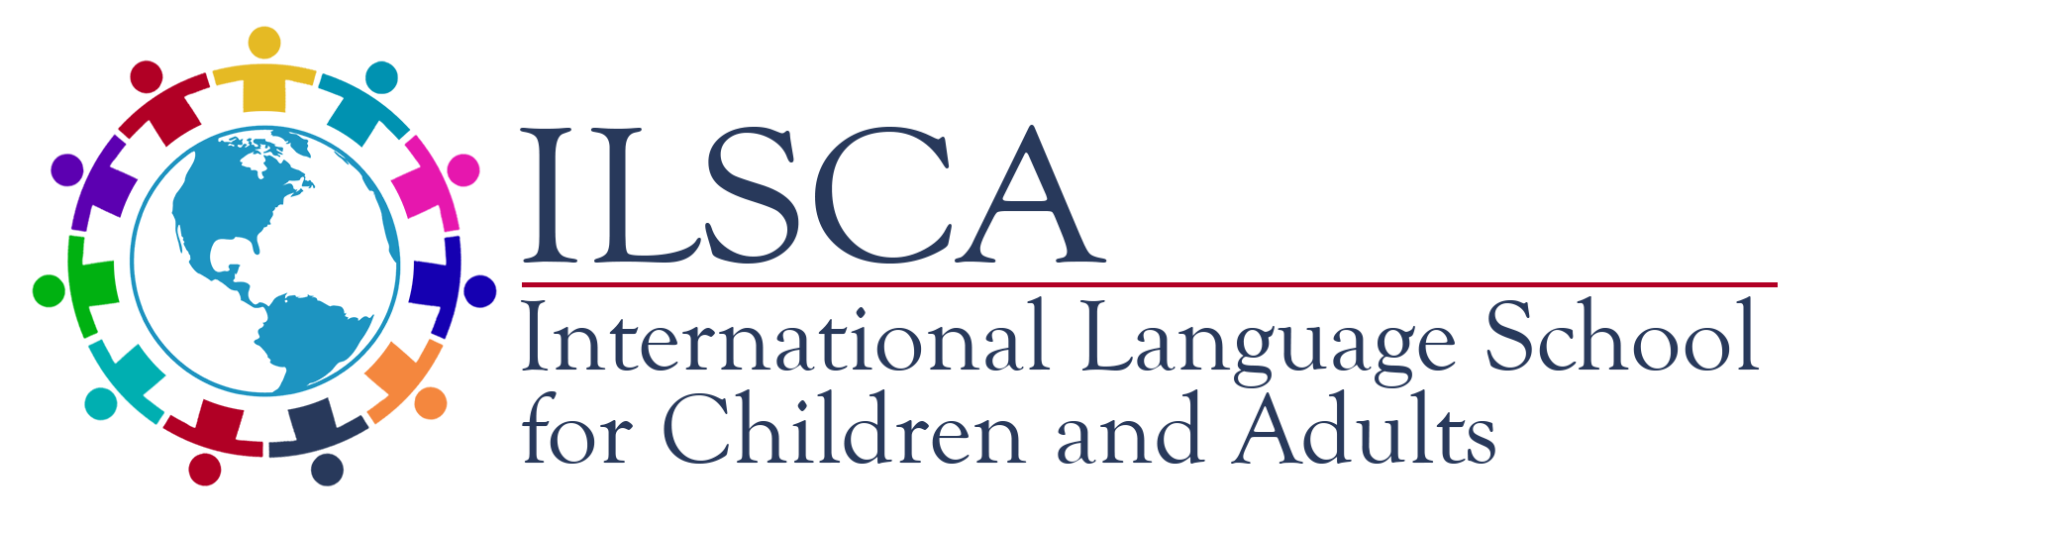 International Language School for Children and Adults Logo